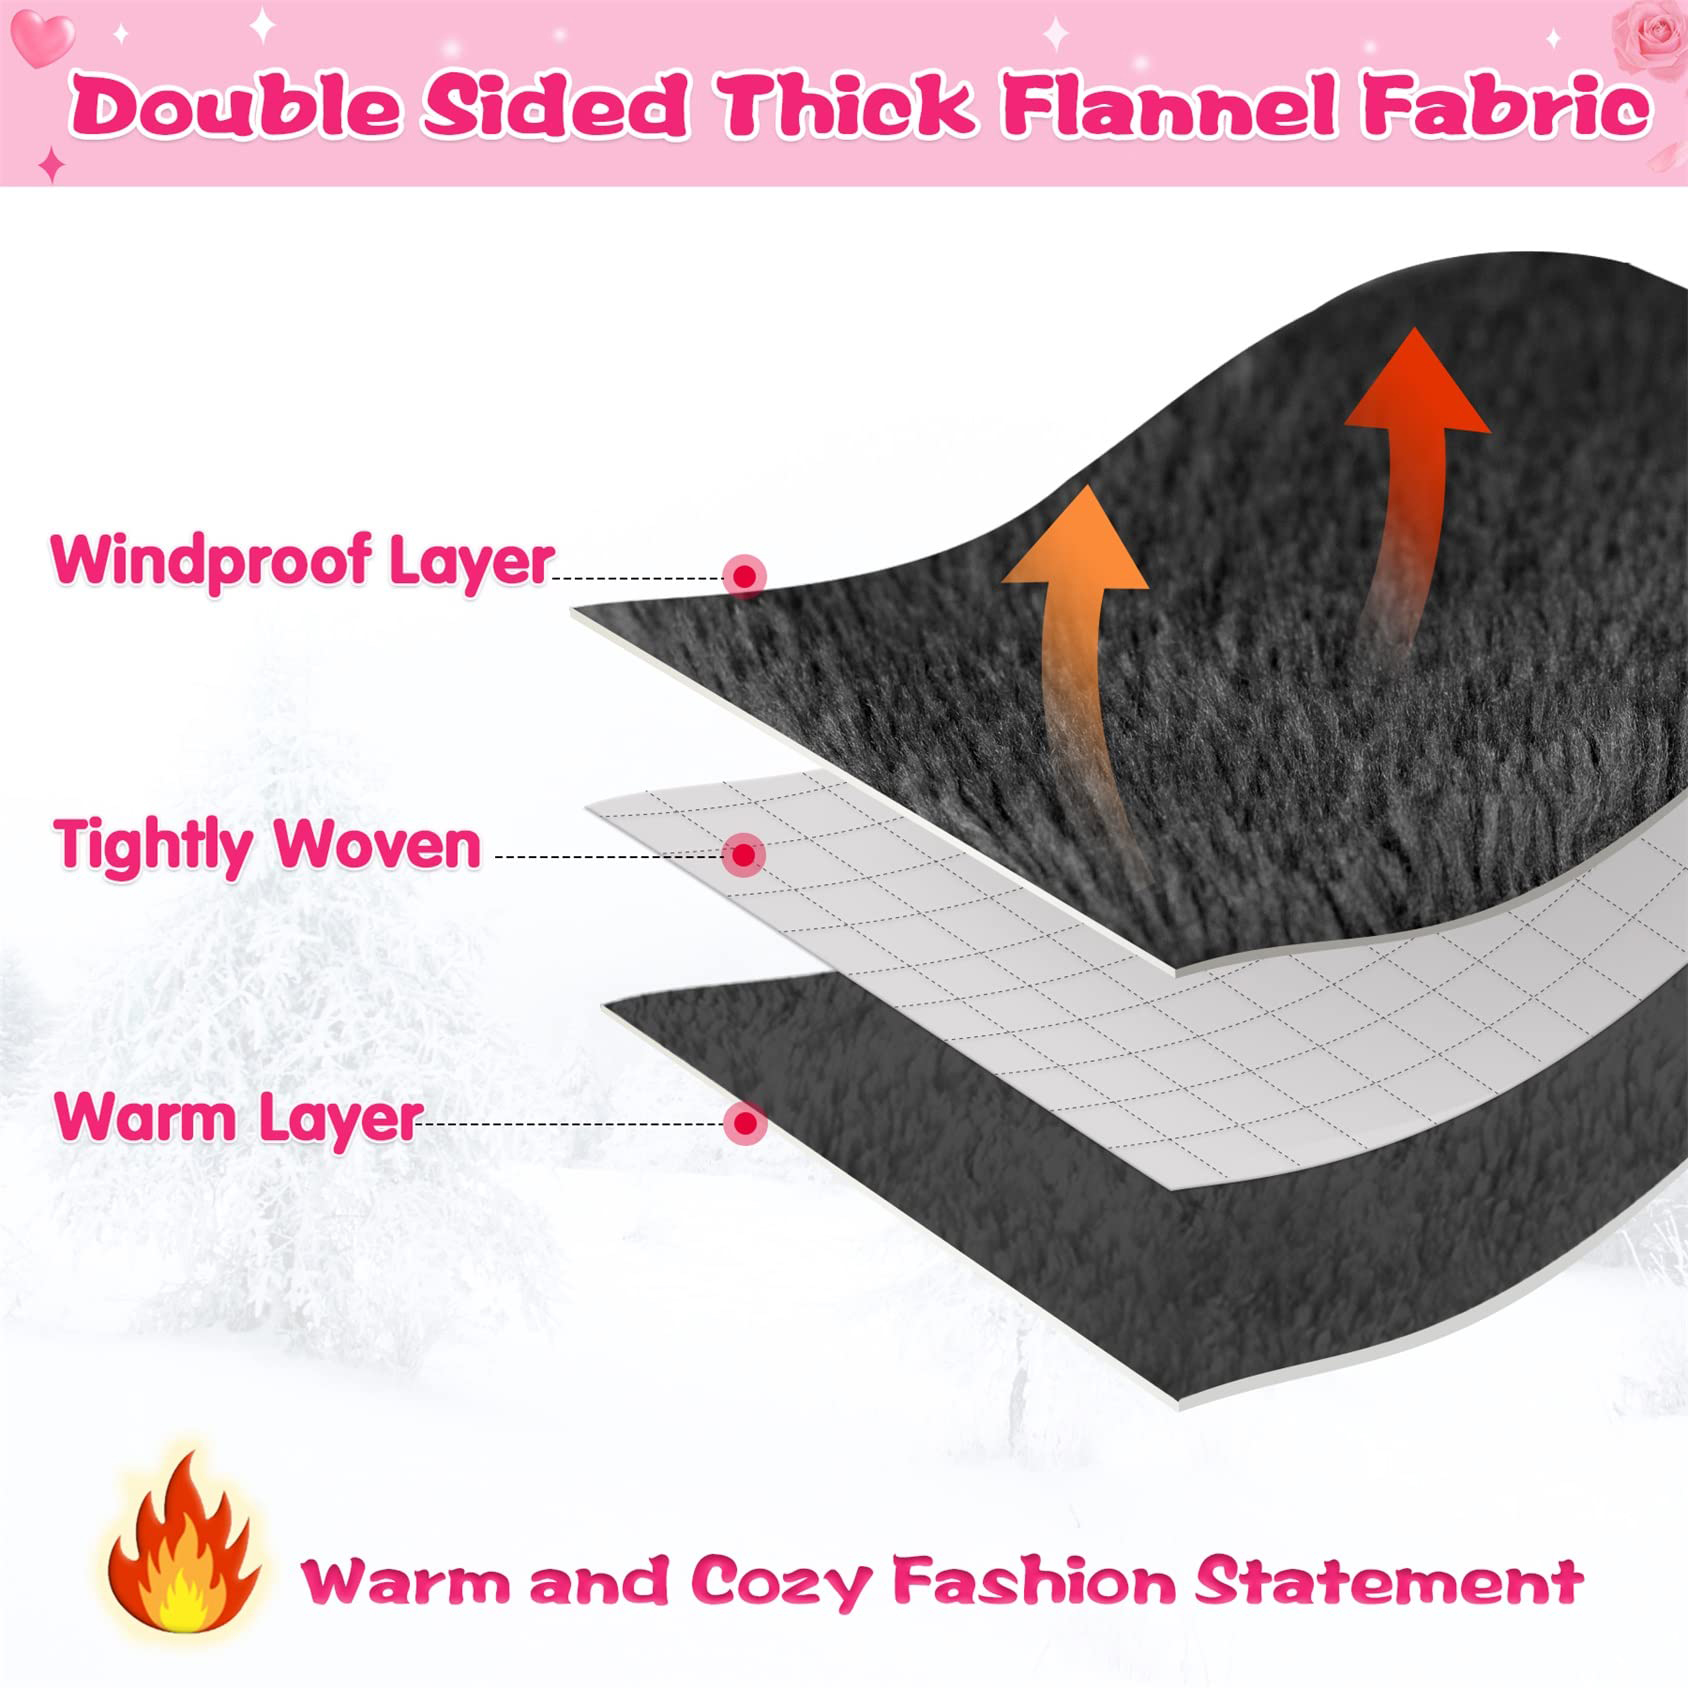 Fantaslook Wearable Blanket Hoodie Sweatshirt for Women and Men, Warm and Cozy Blanket Hoodie, Flannel Blanket with Sleeves and Giant Pocket - image 5 of 6